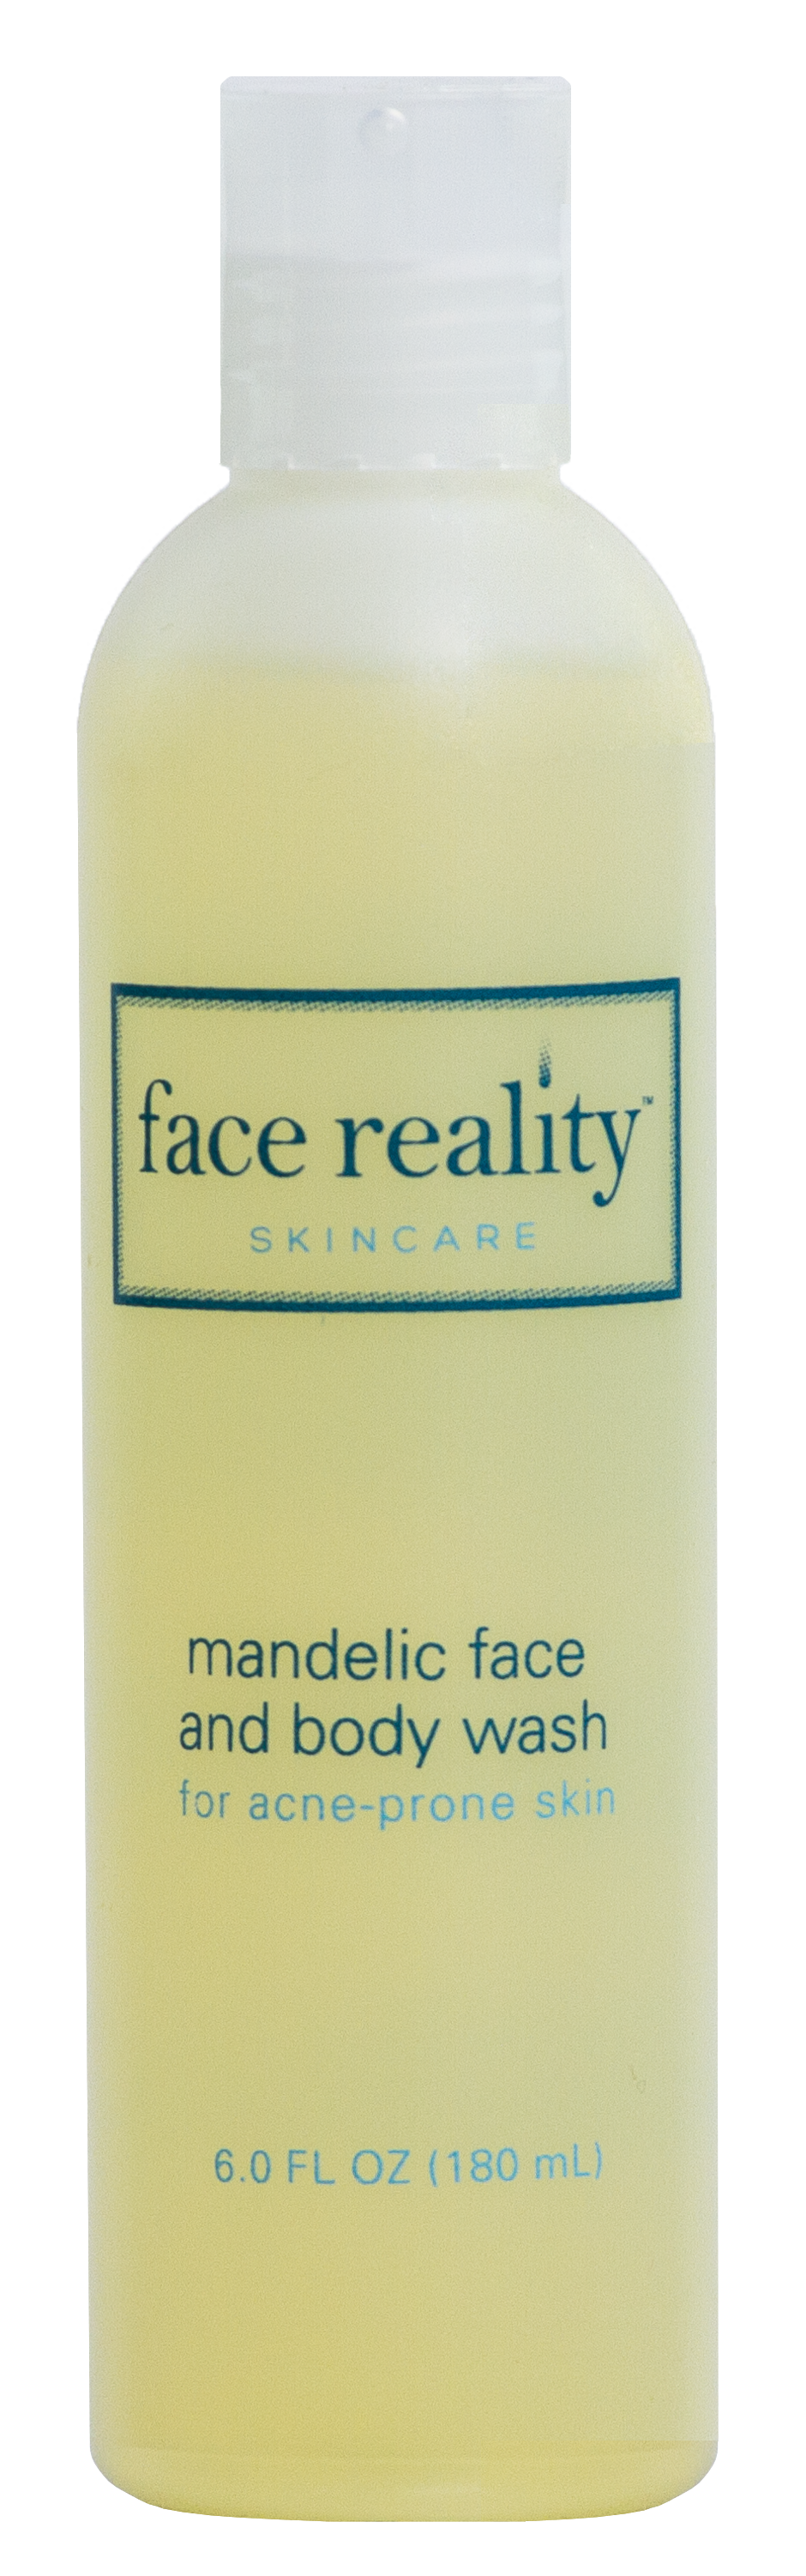 Mandelic Face and Body Wash